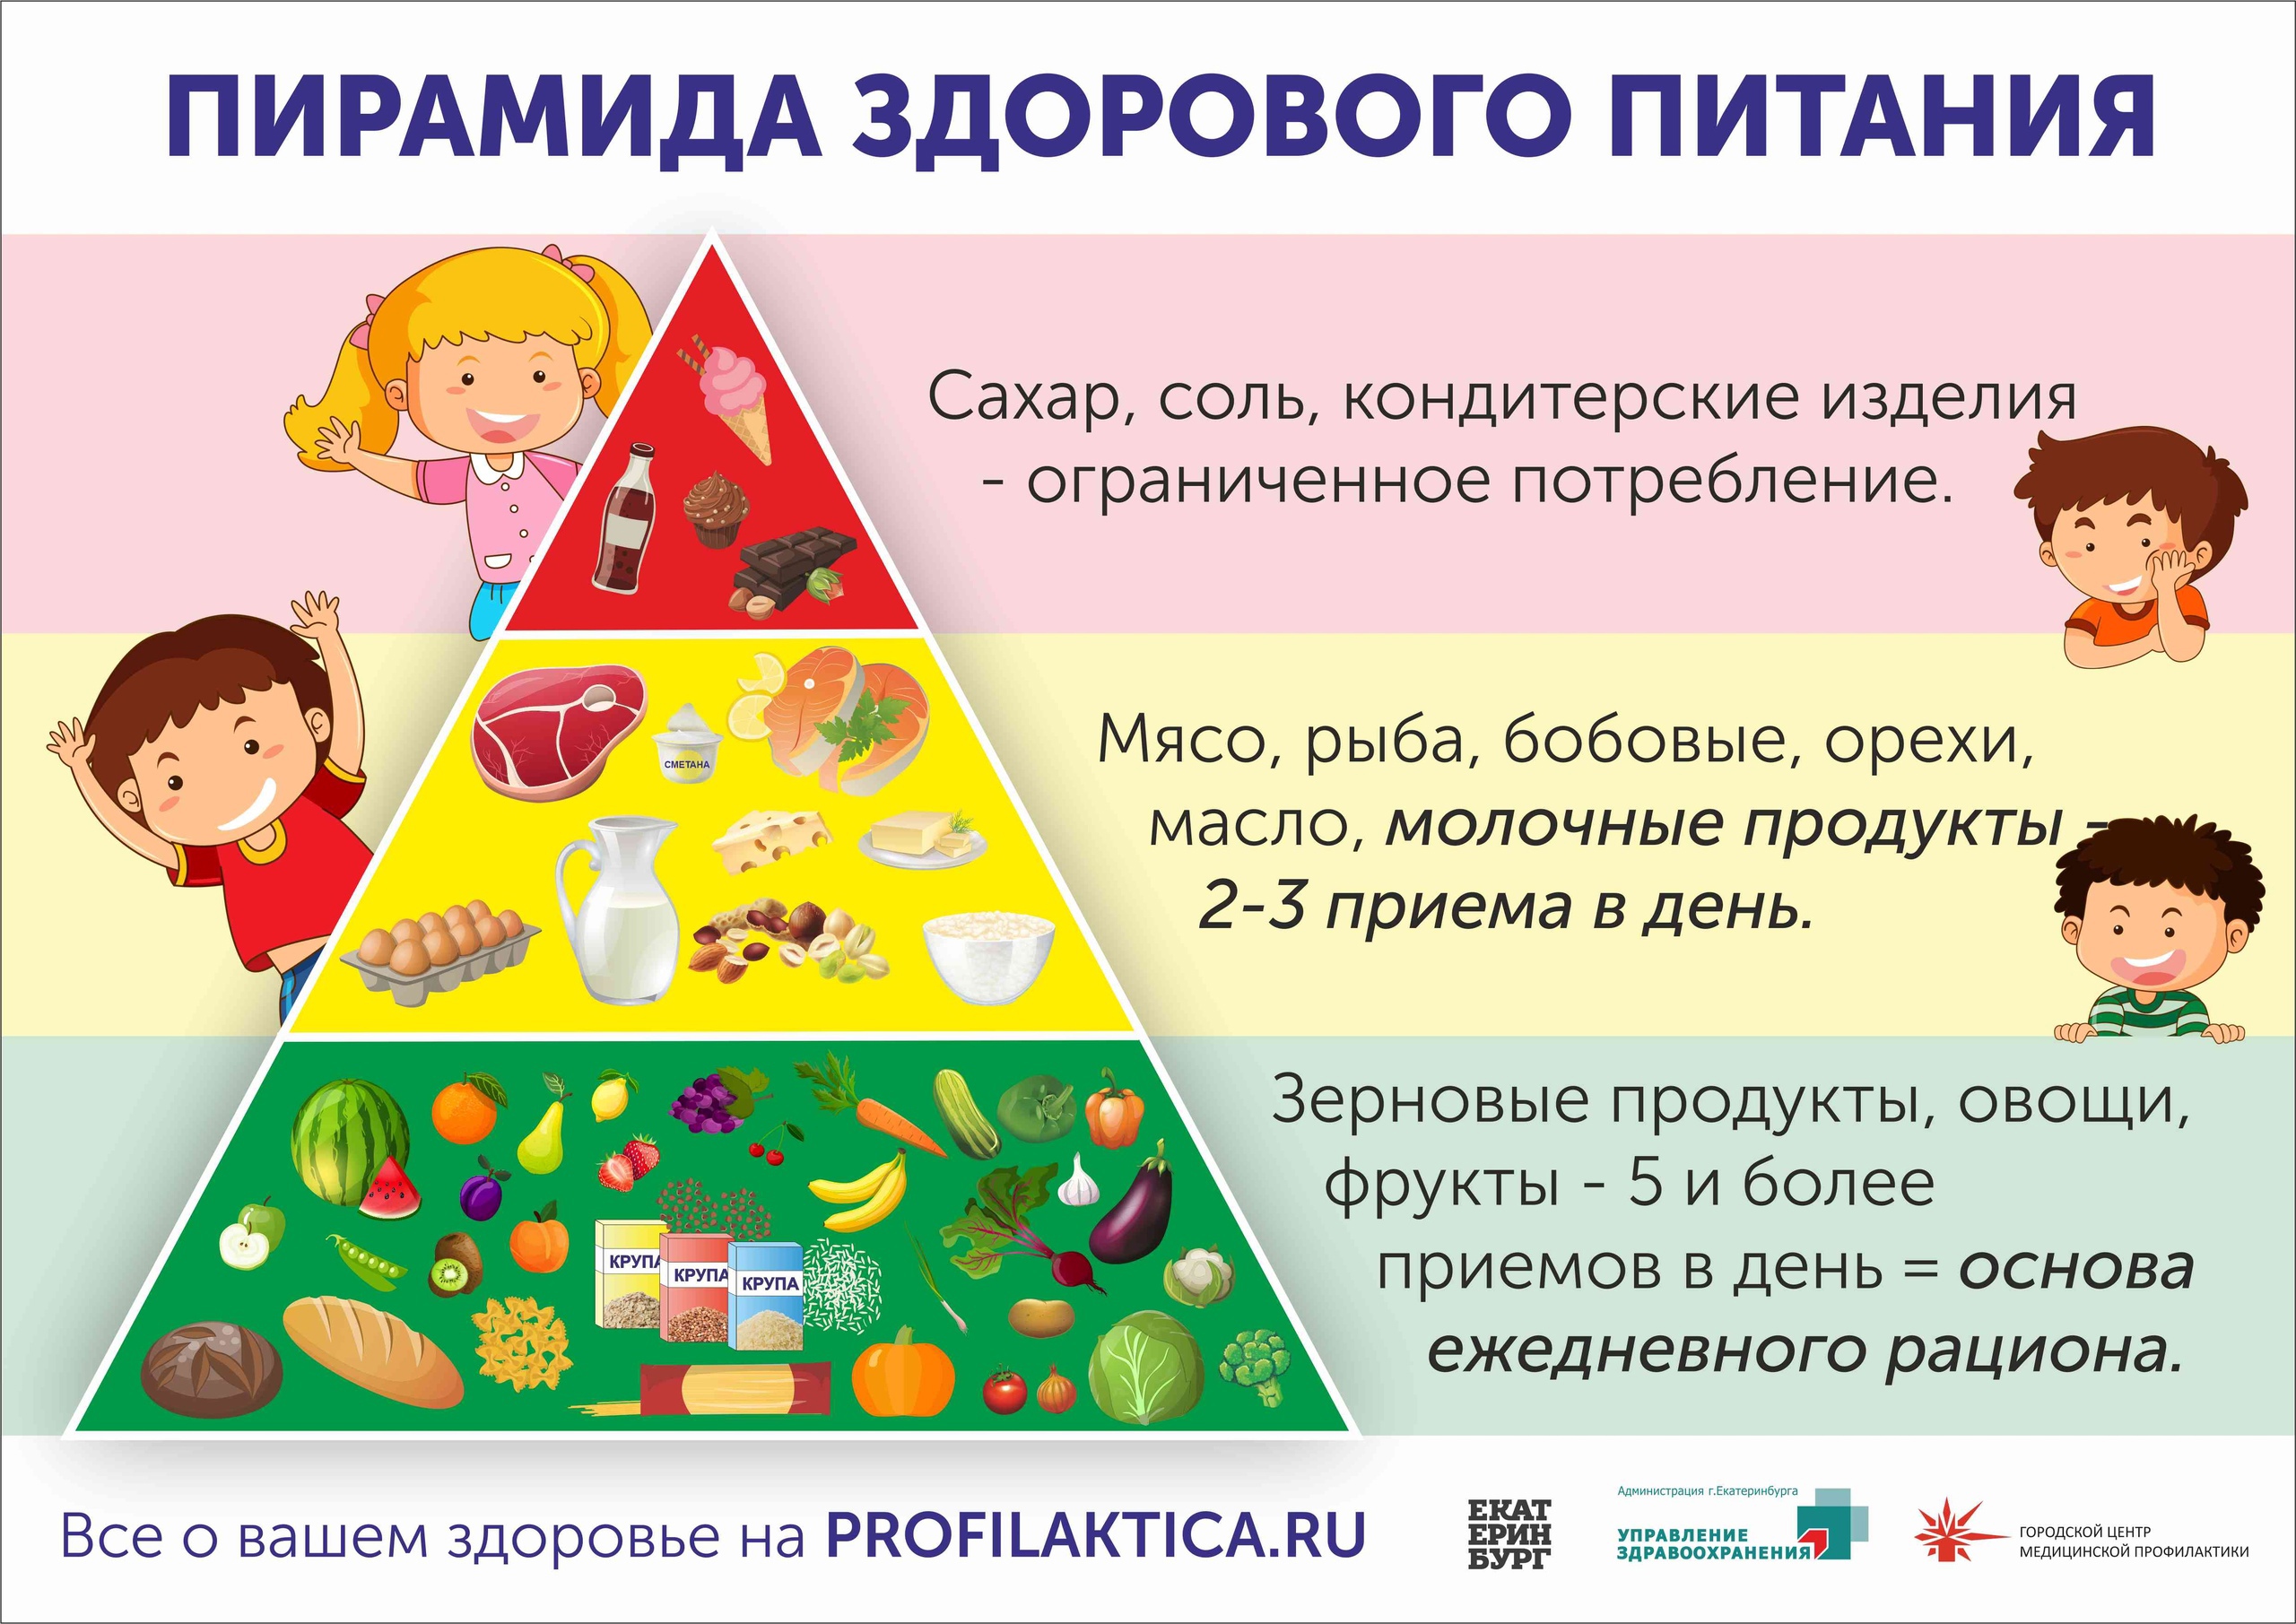 Пирамида здорового питания.jpg